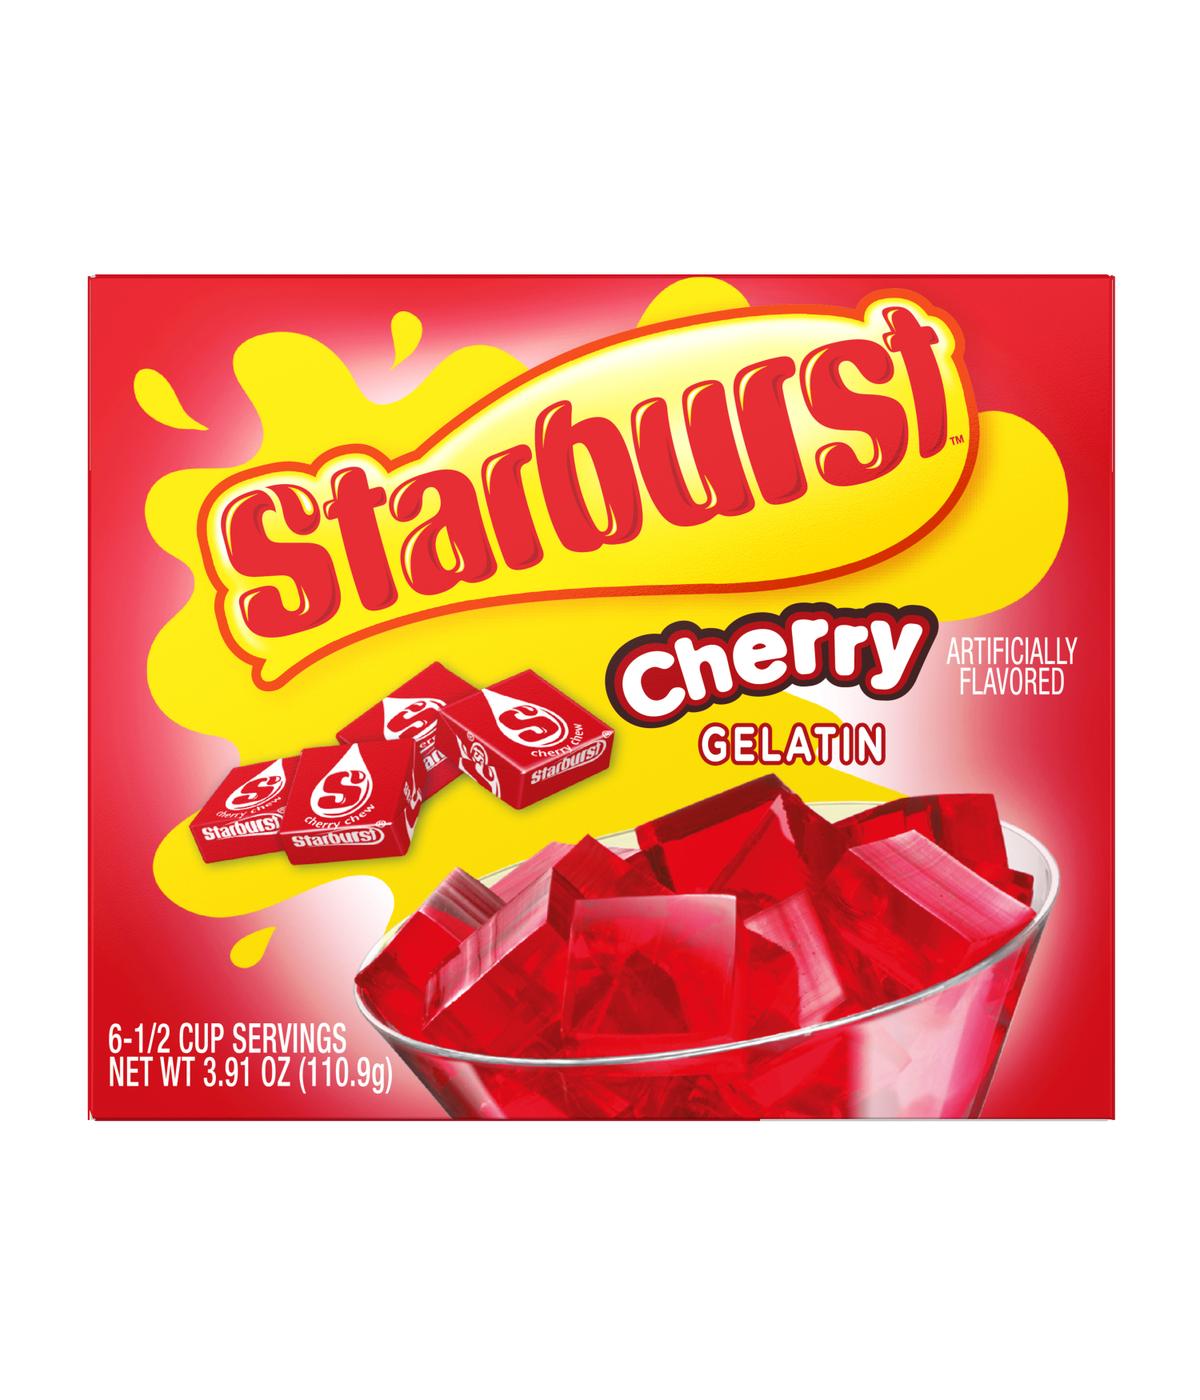 Starburst Gelatin - Cherry; image 1 of 3